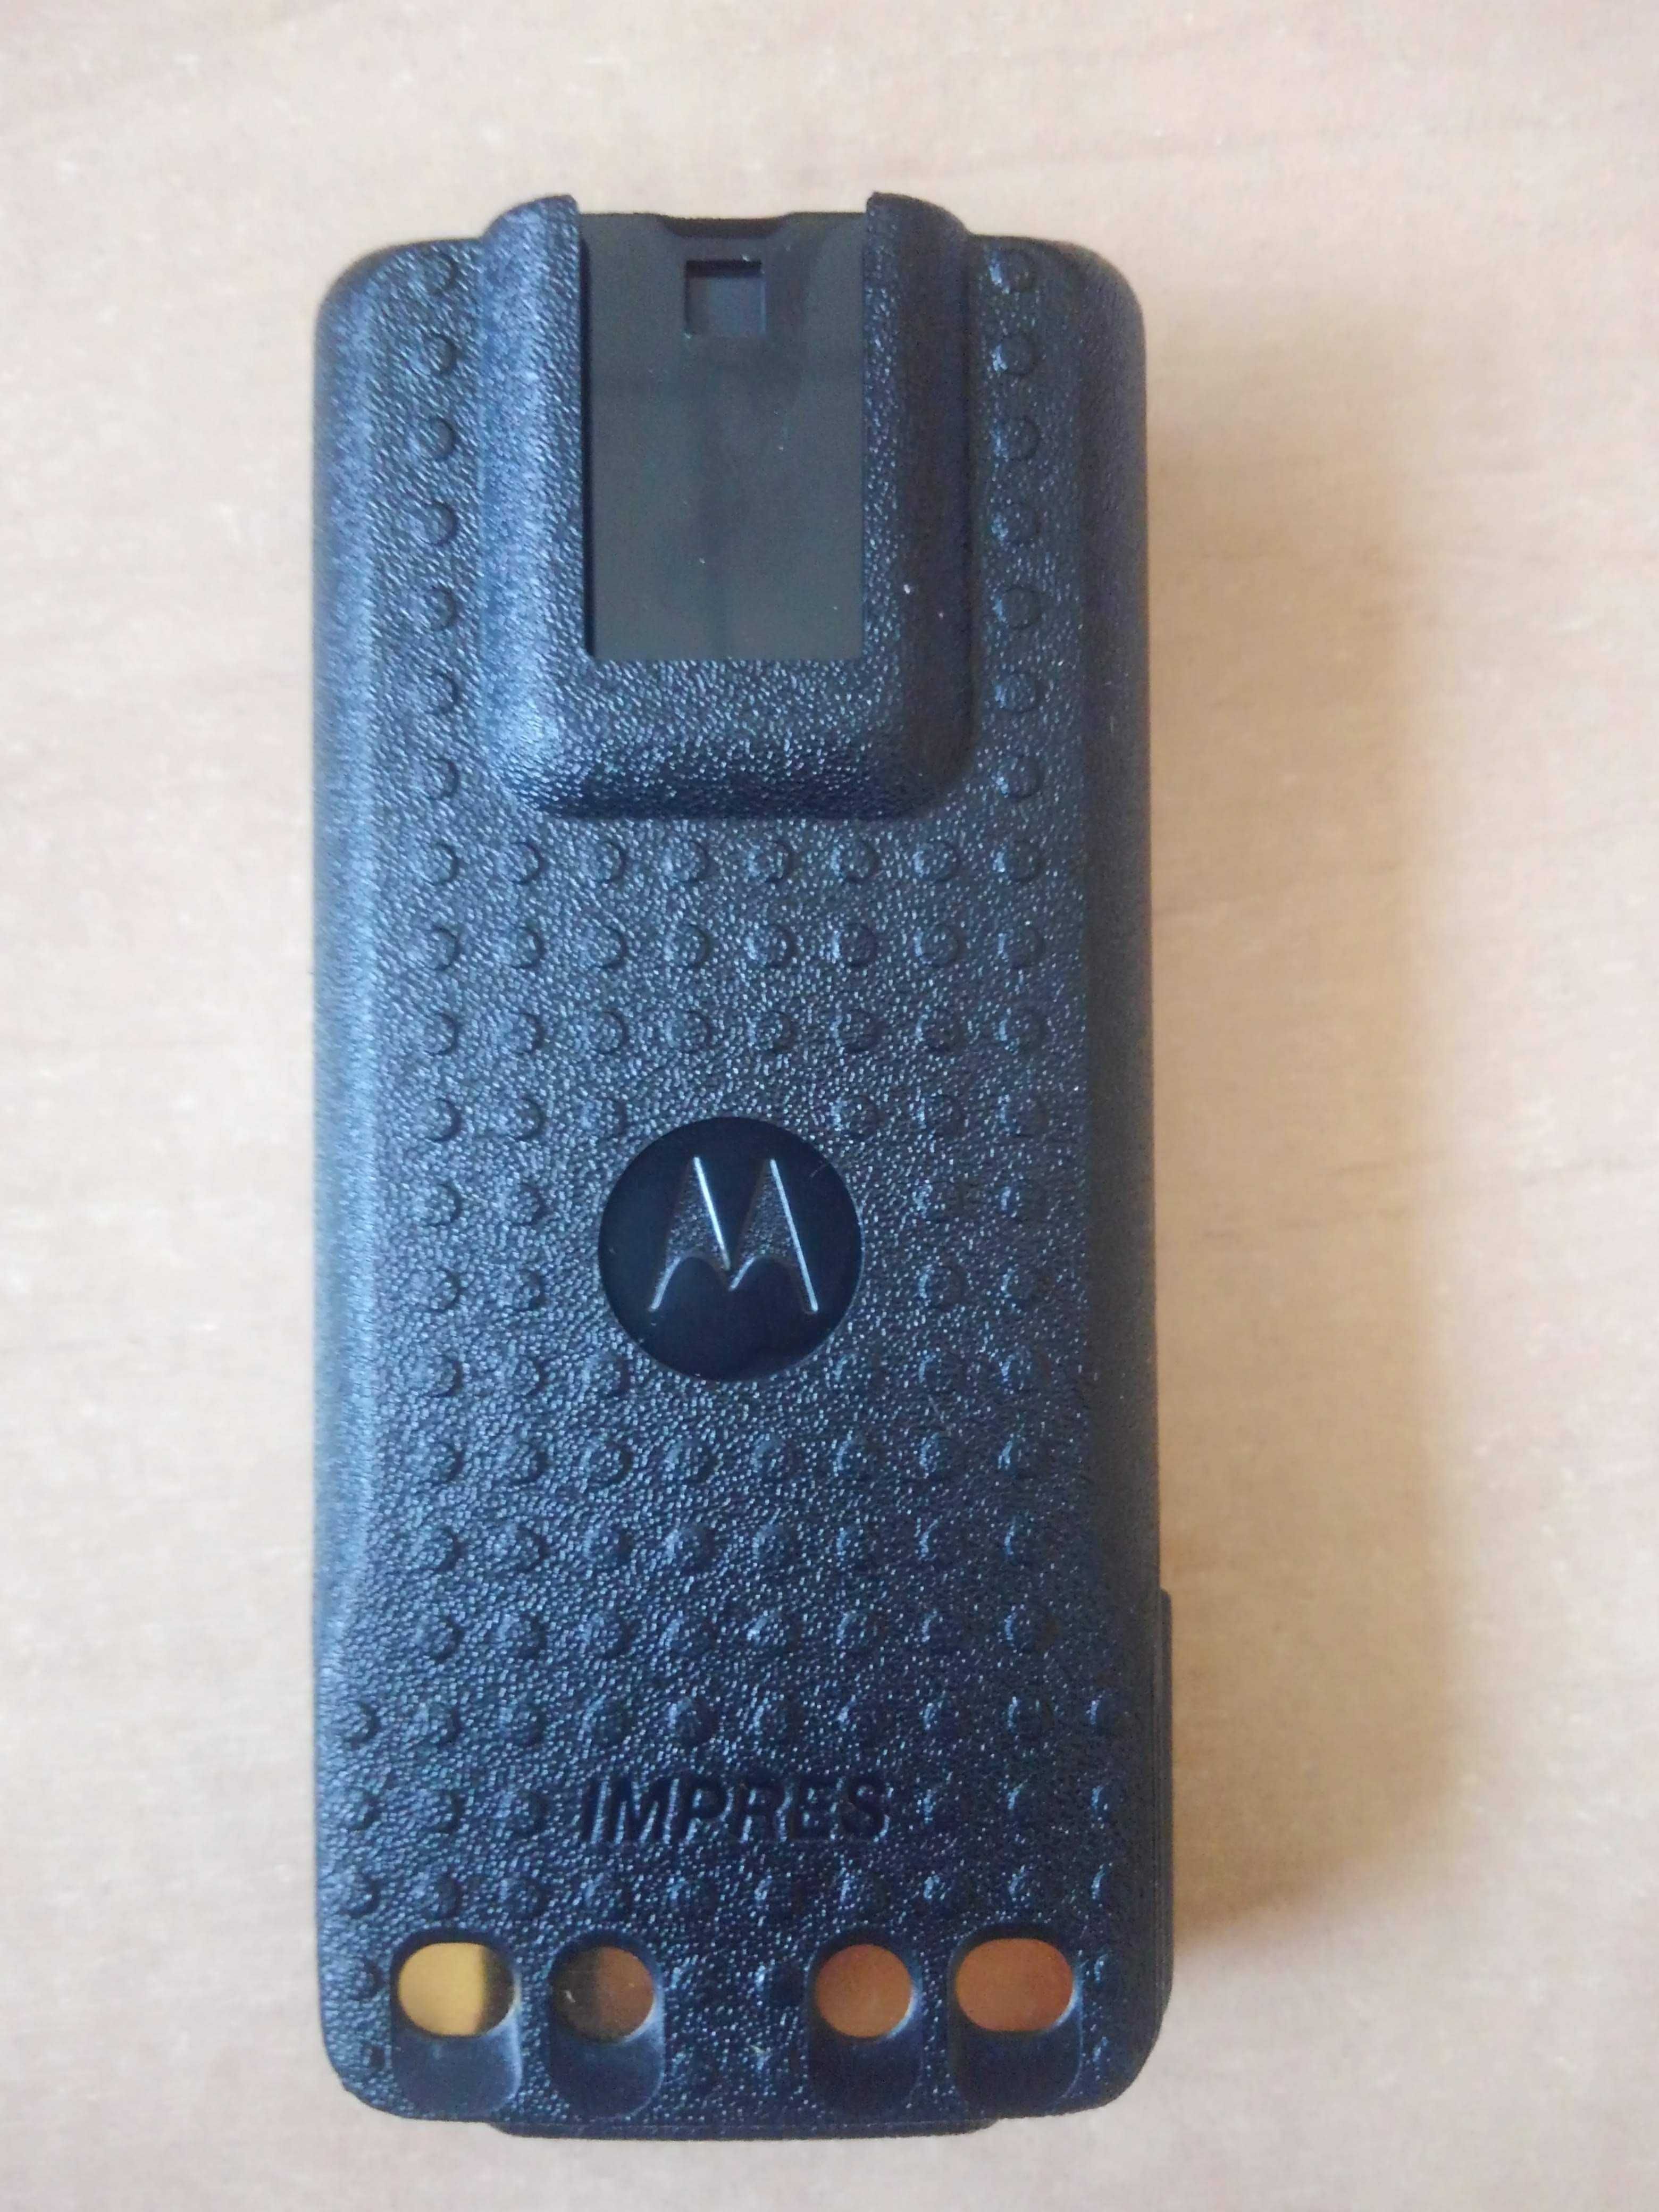 Motorola nntn8129ar акумулятор